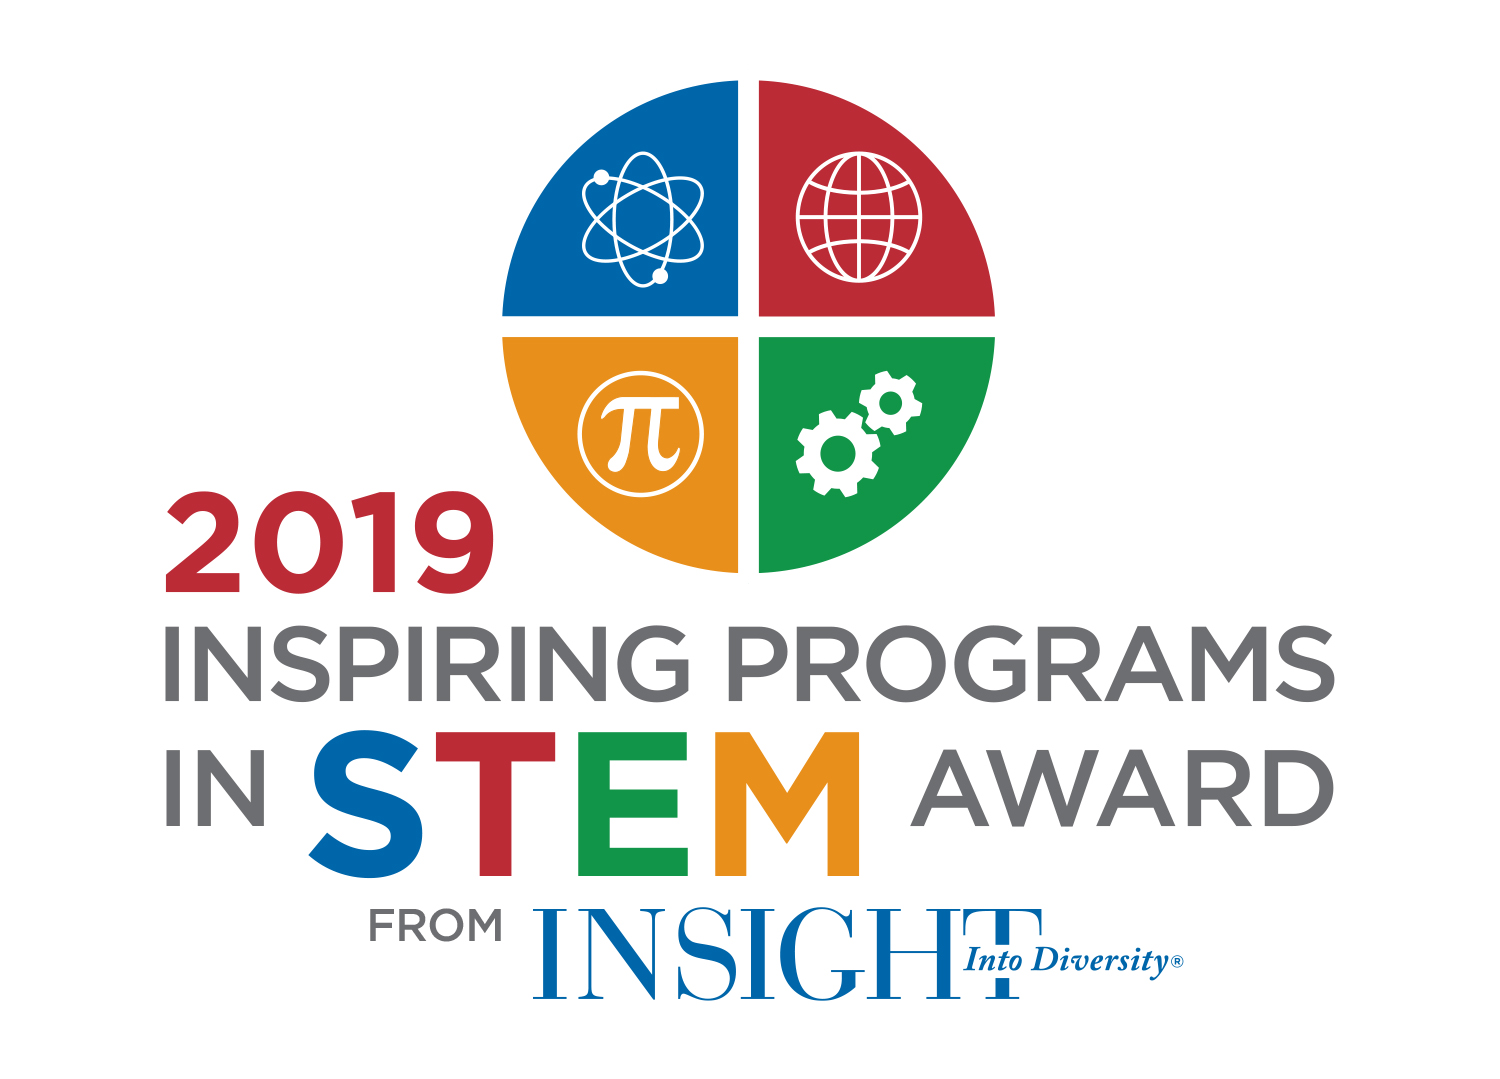 IID_STEM_Award_logo_2019